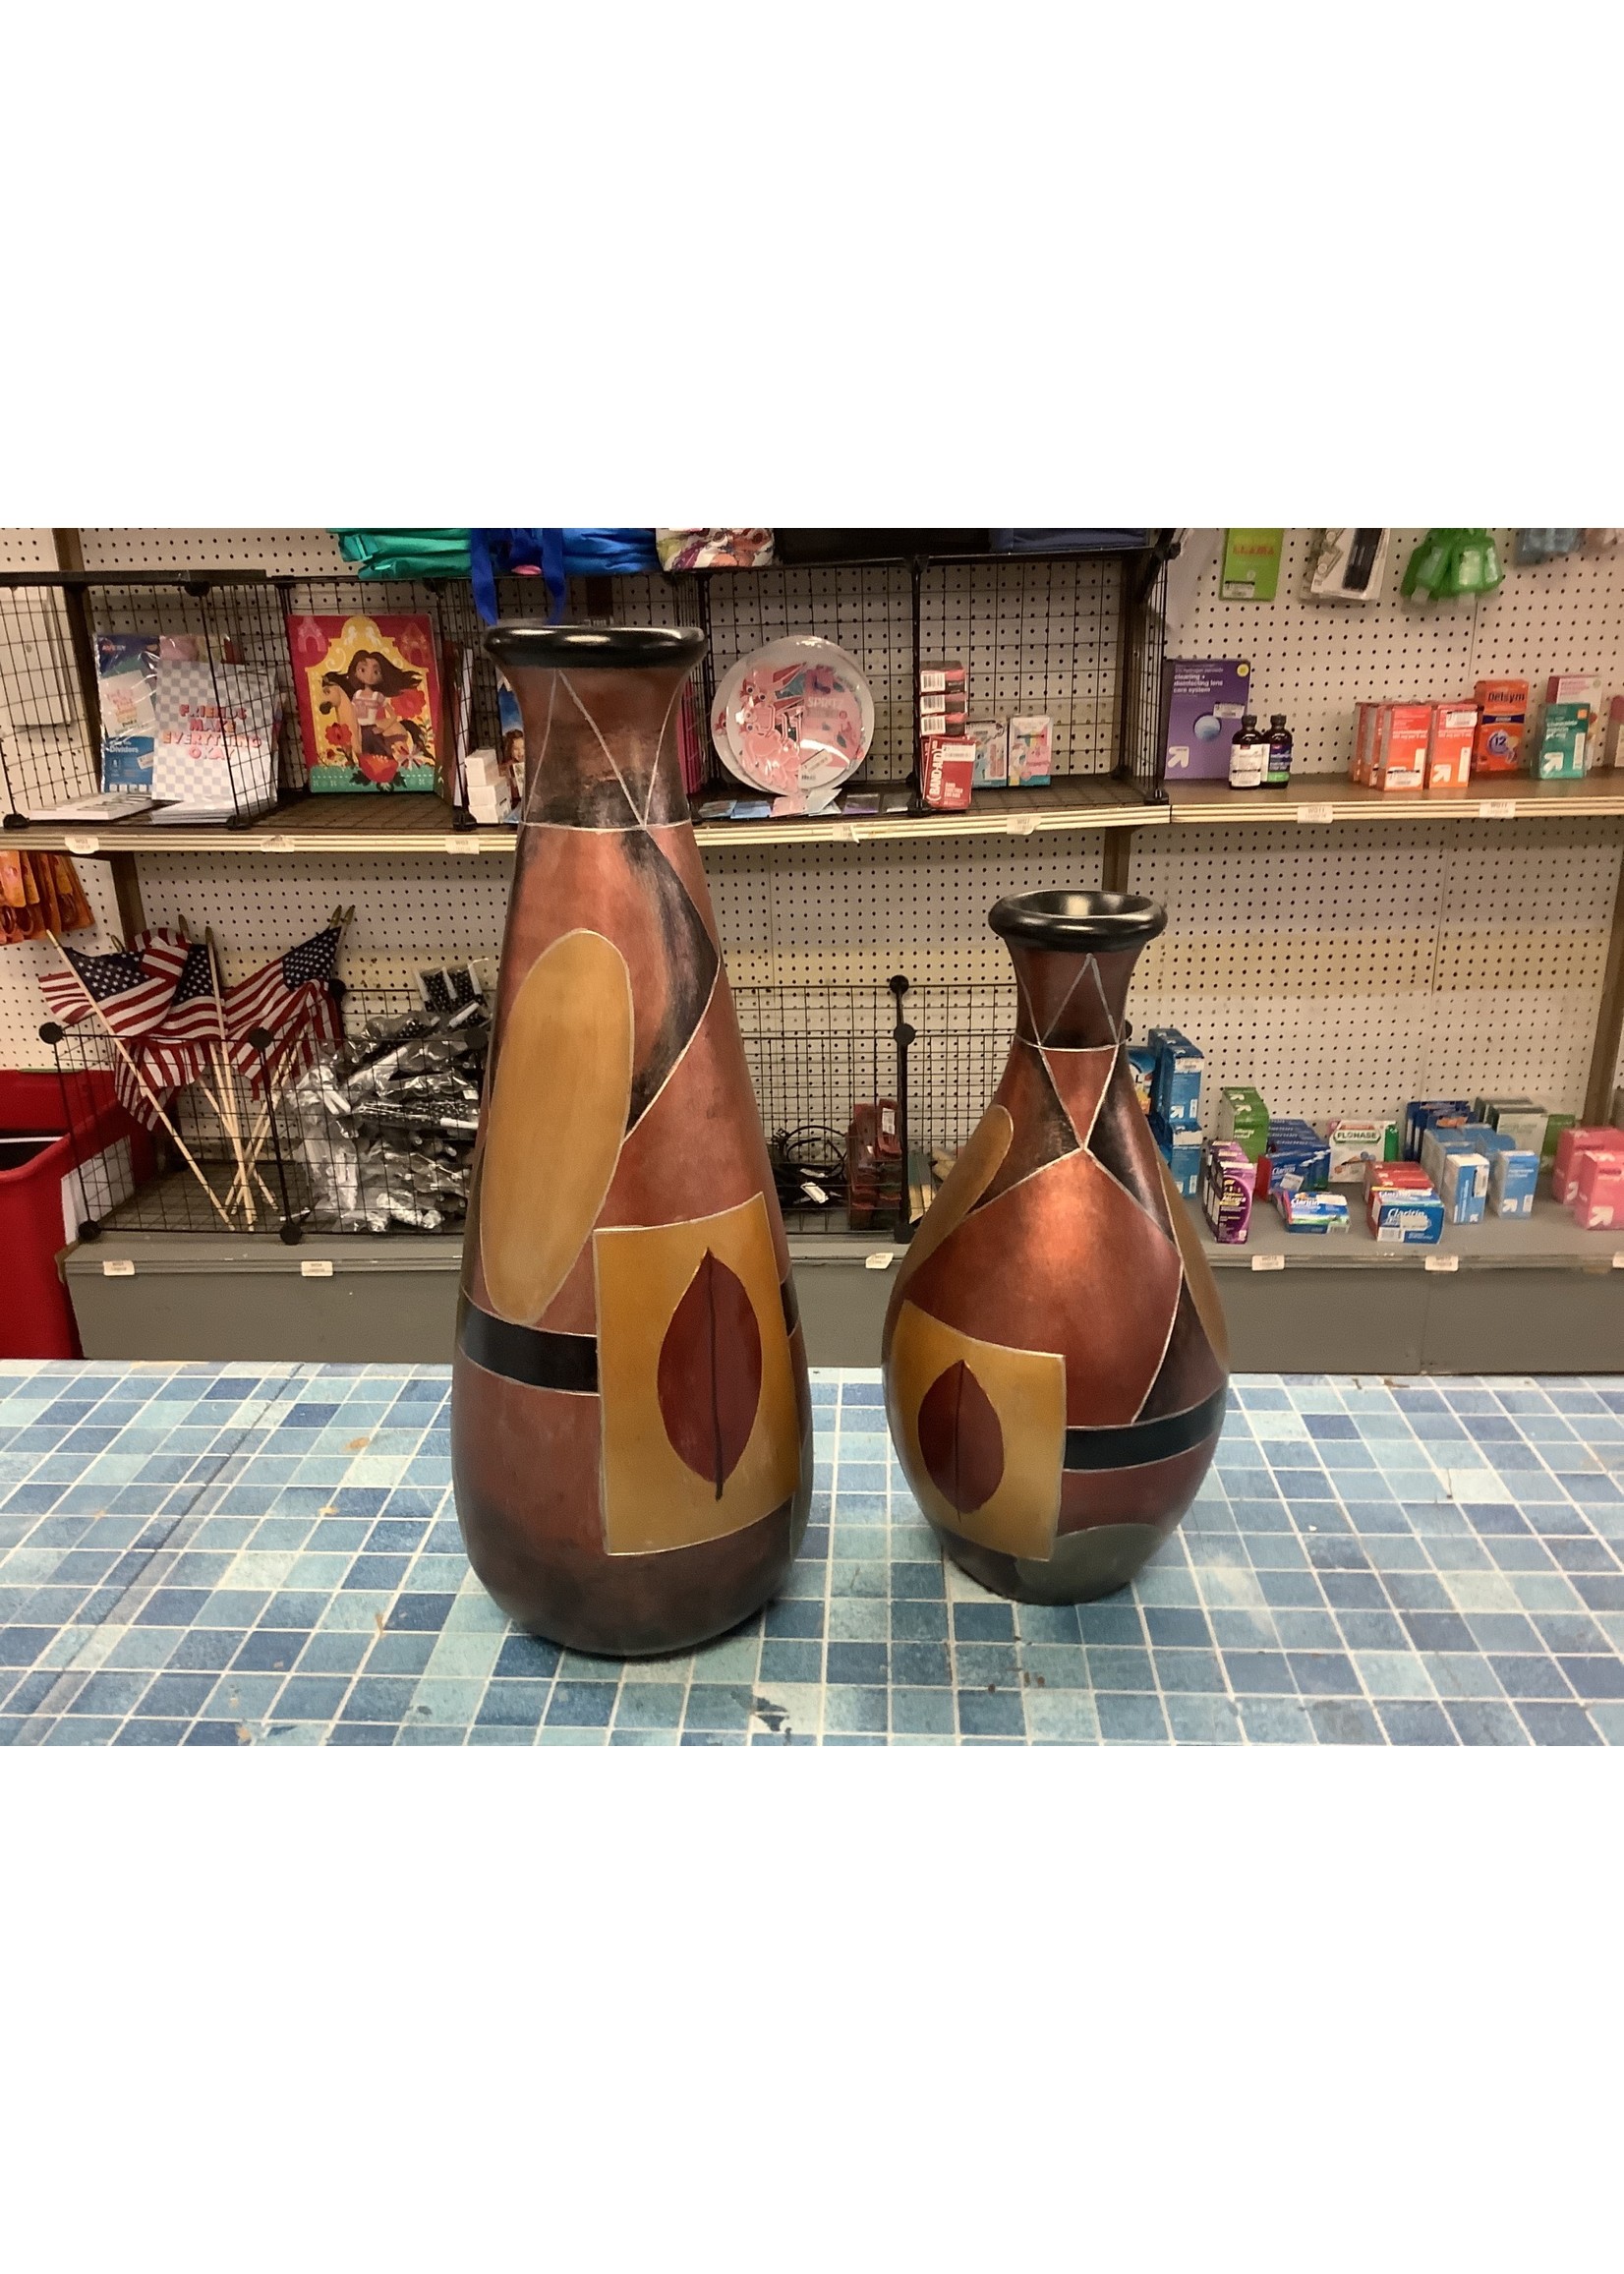 Pair of Decorative Vases 15.5”x5.5” & 11.5”x5.5”